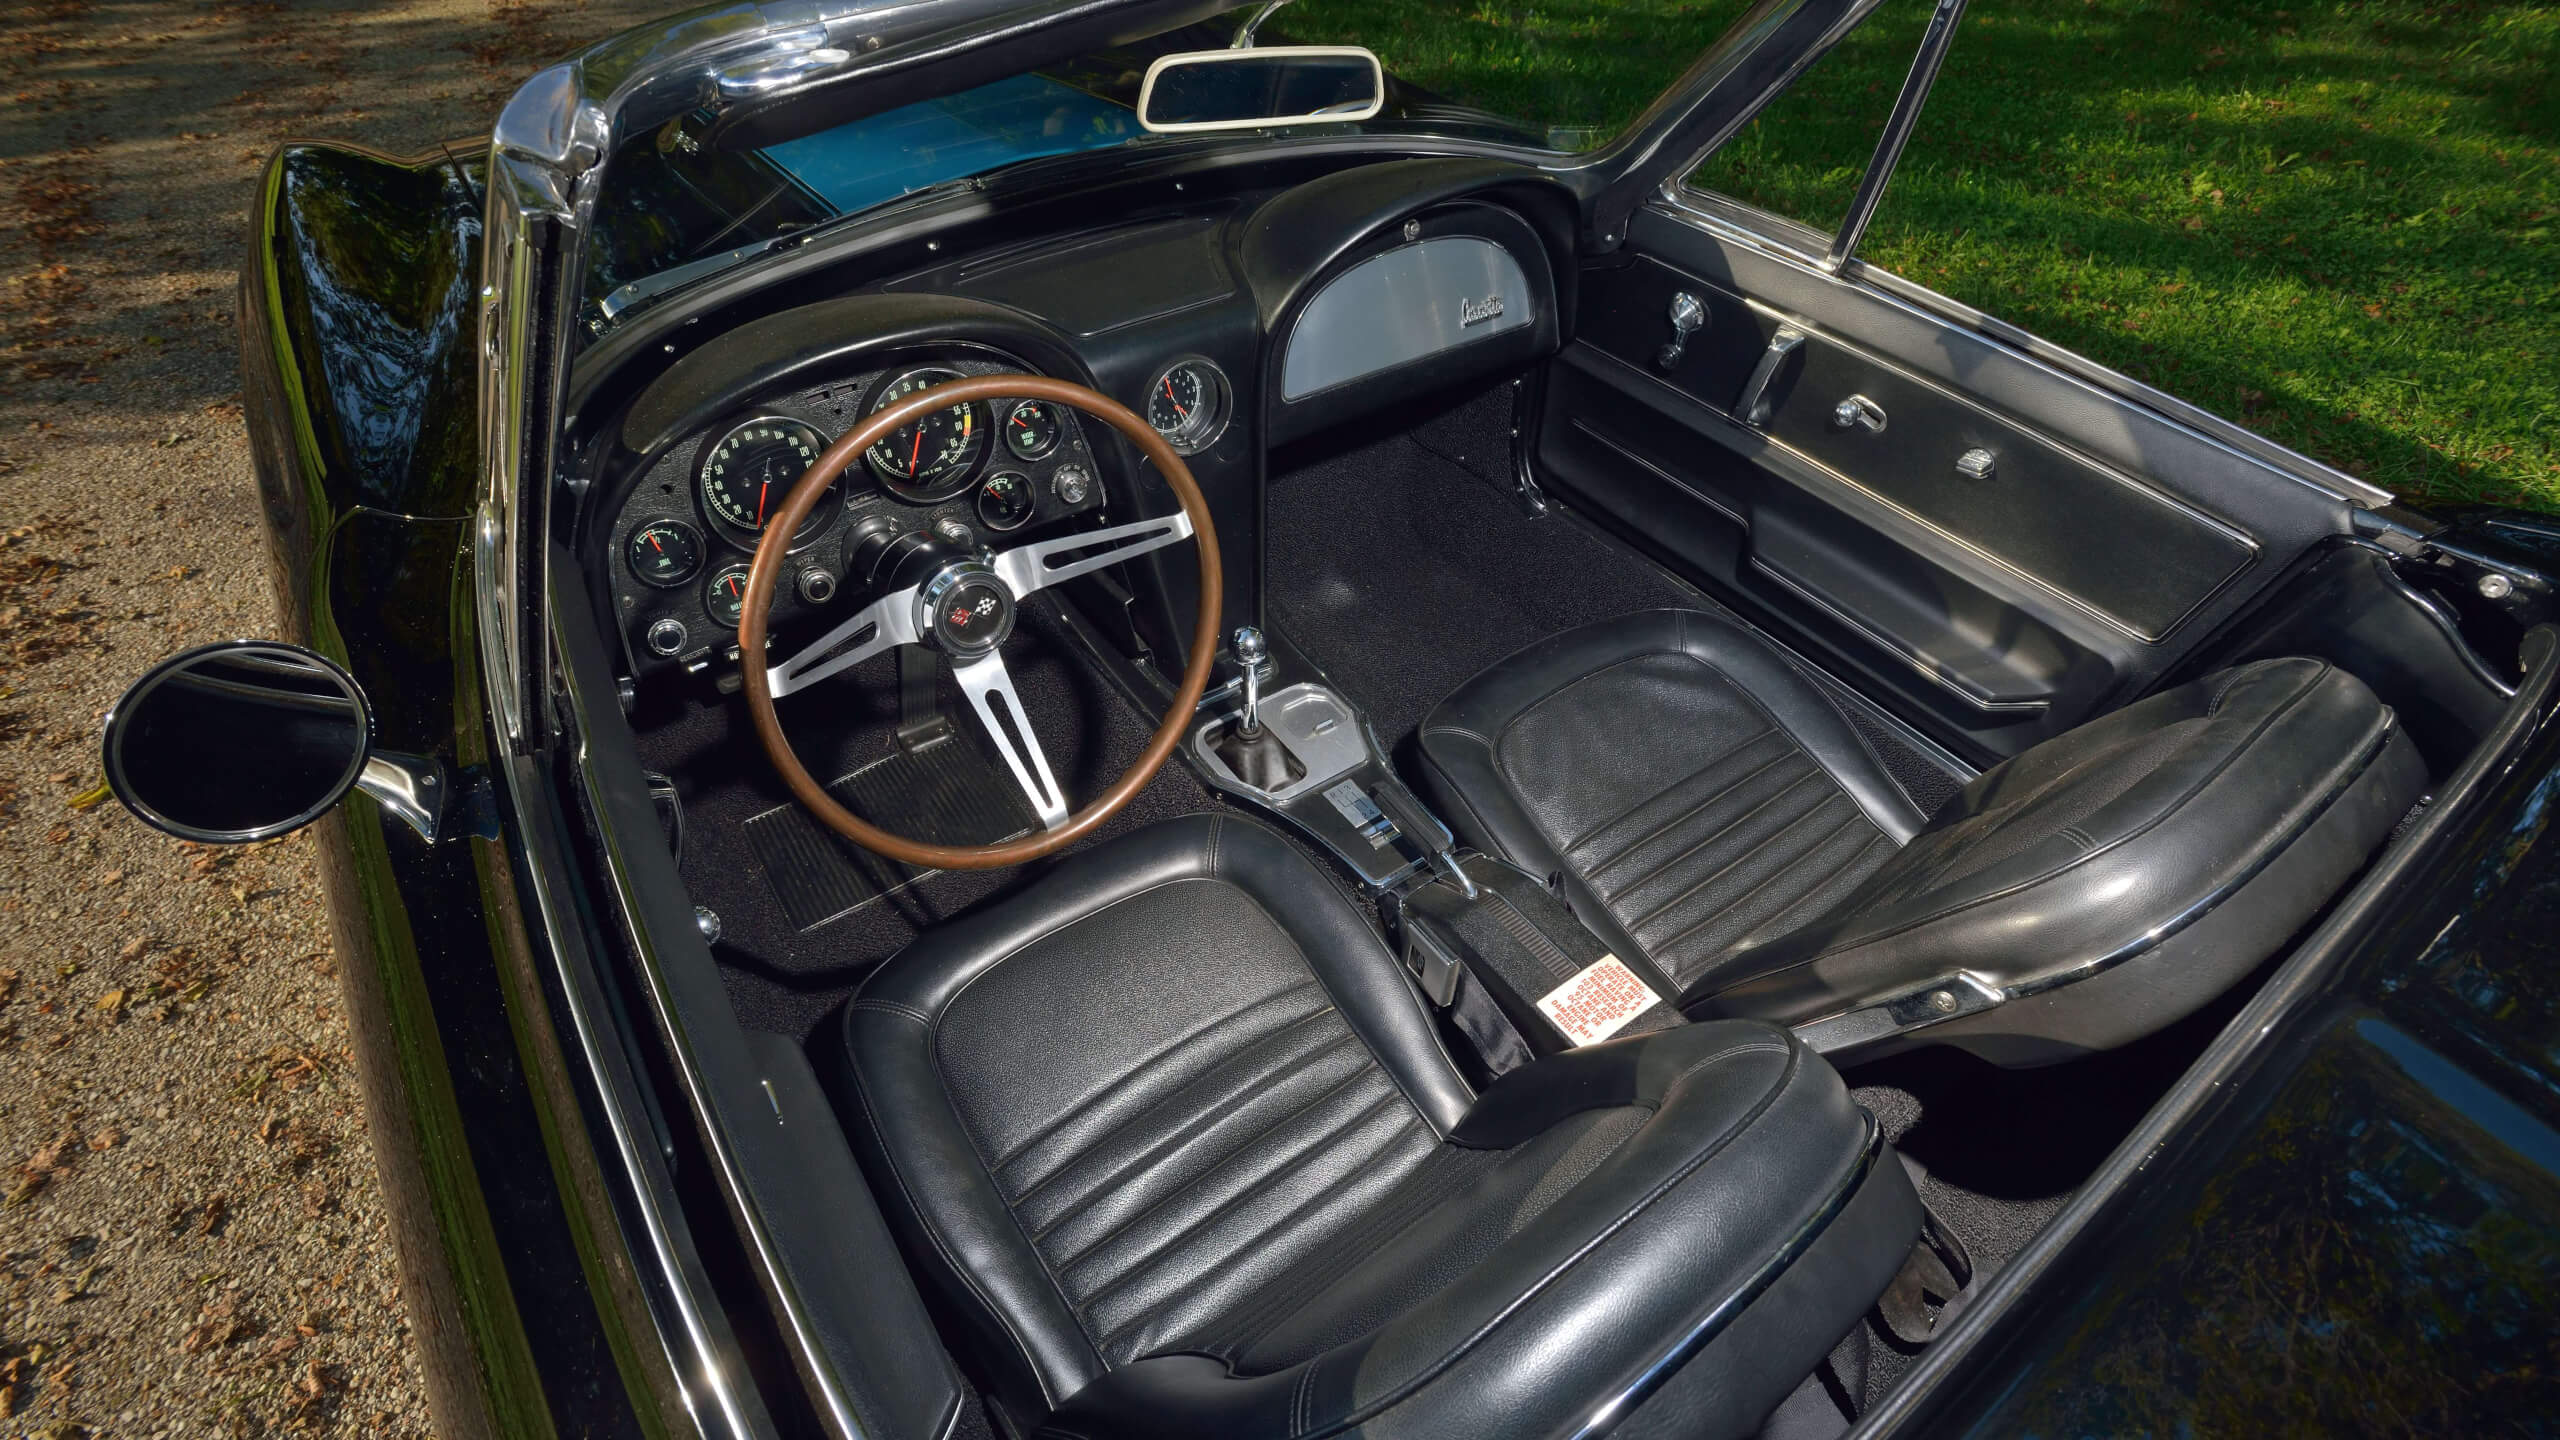 1967 Corvette Convertible - Tuxedo Black - First L88 Corvette